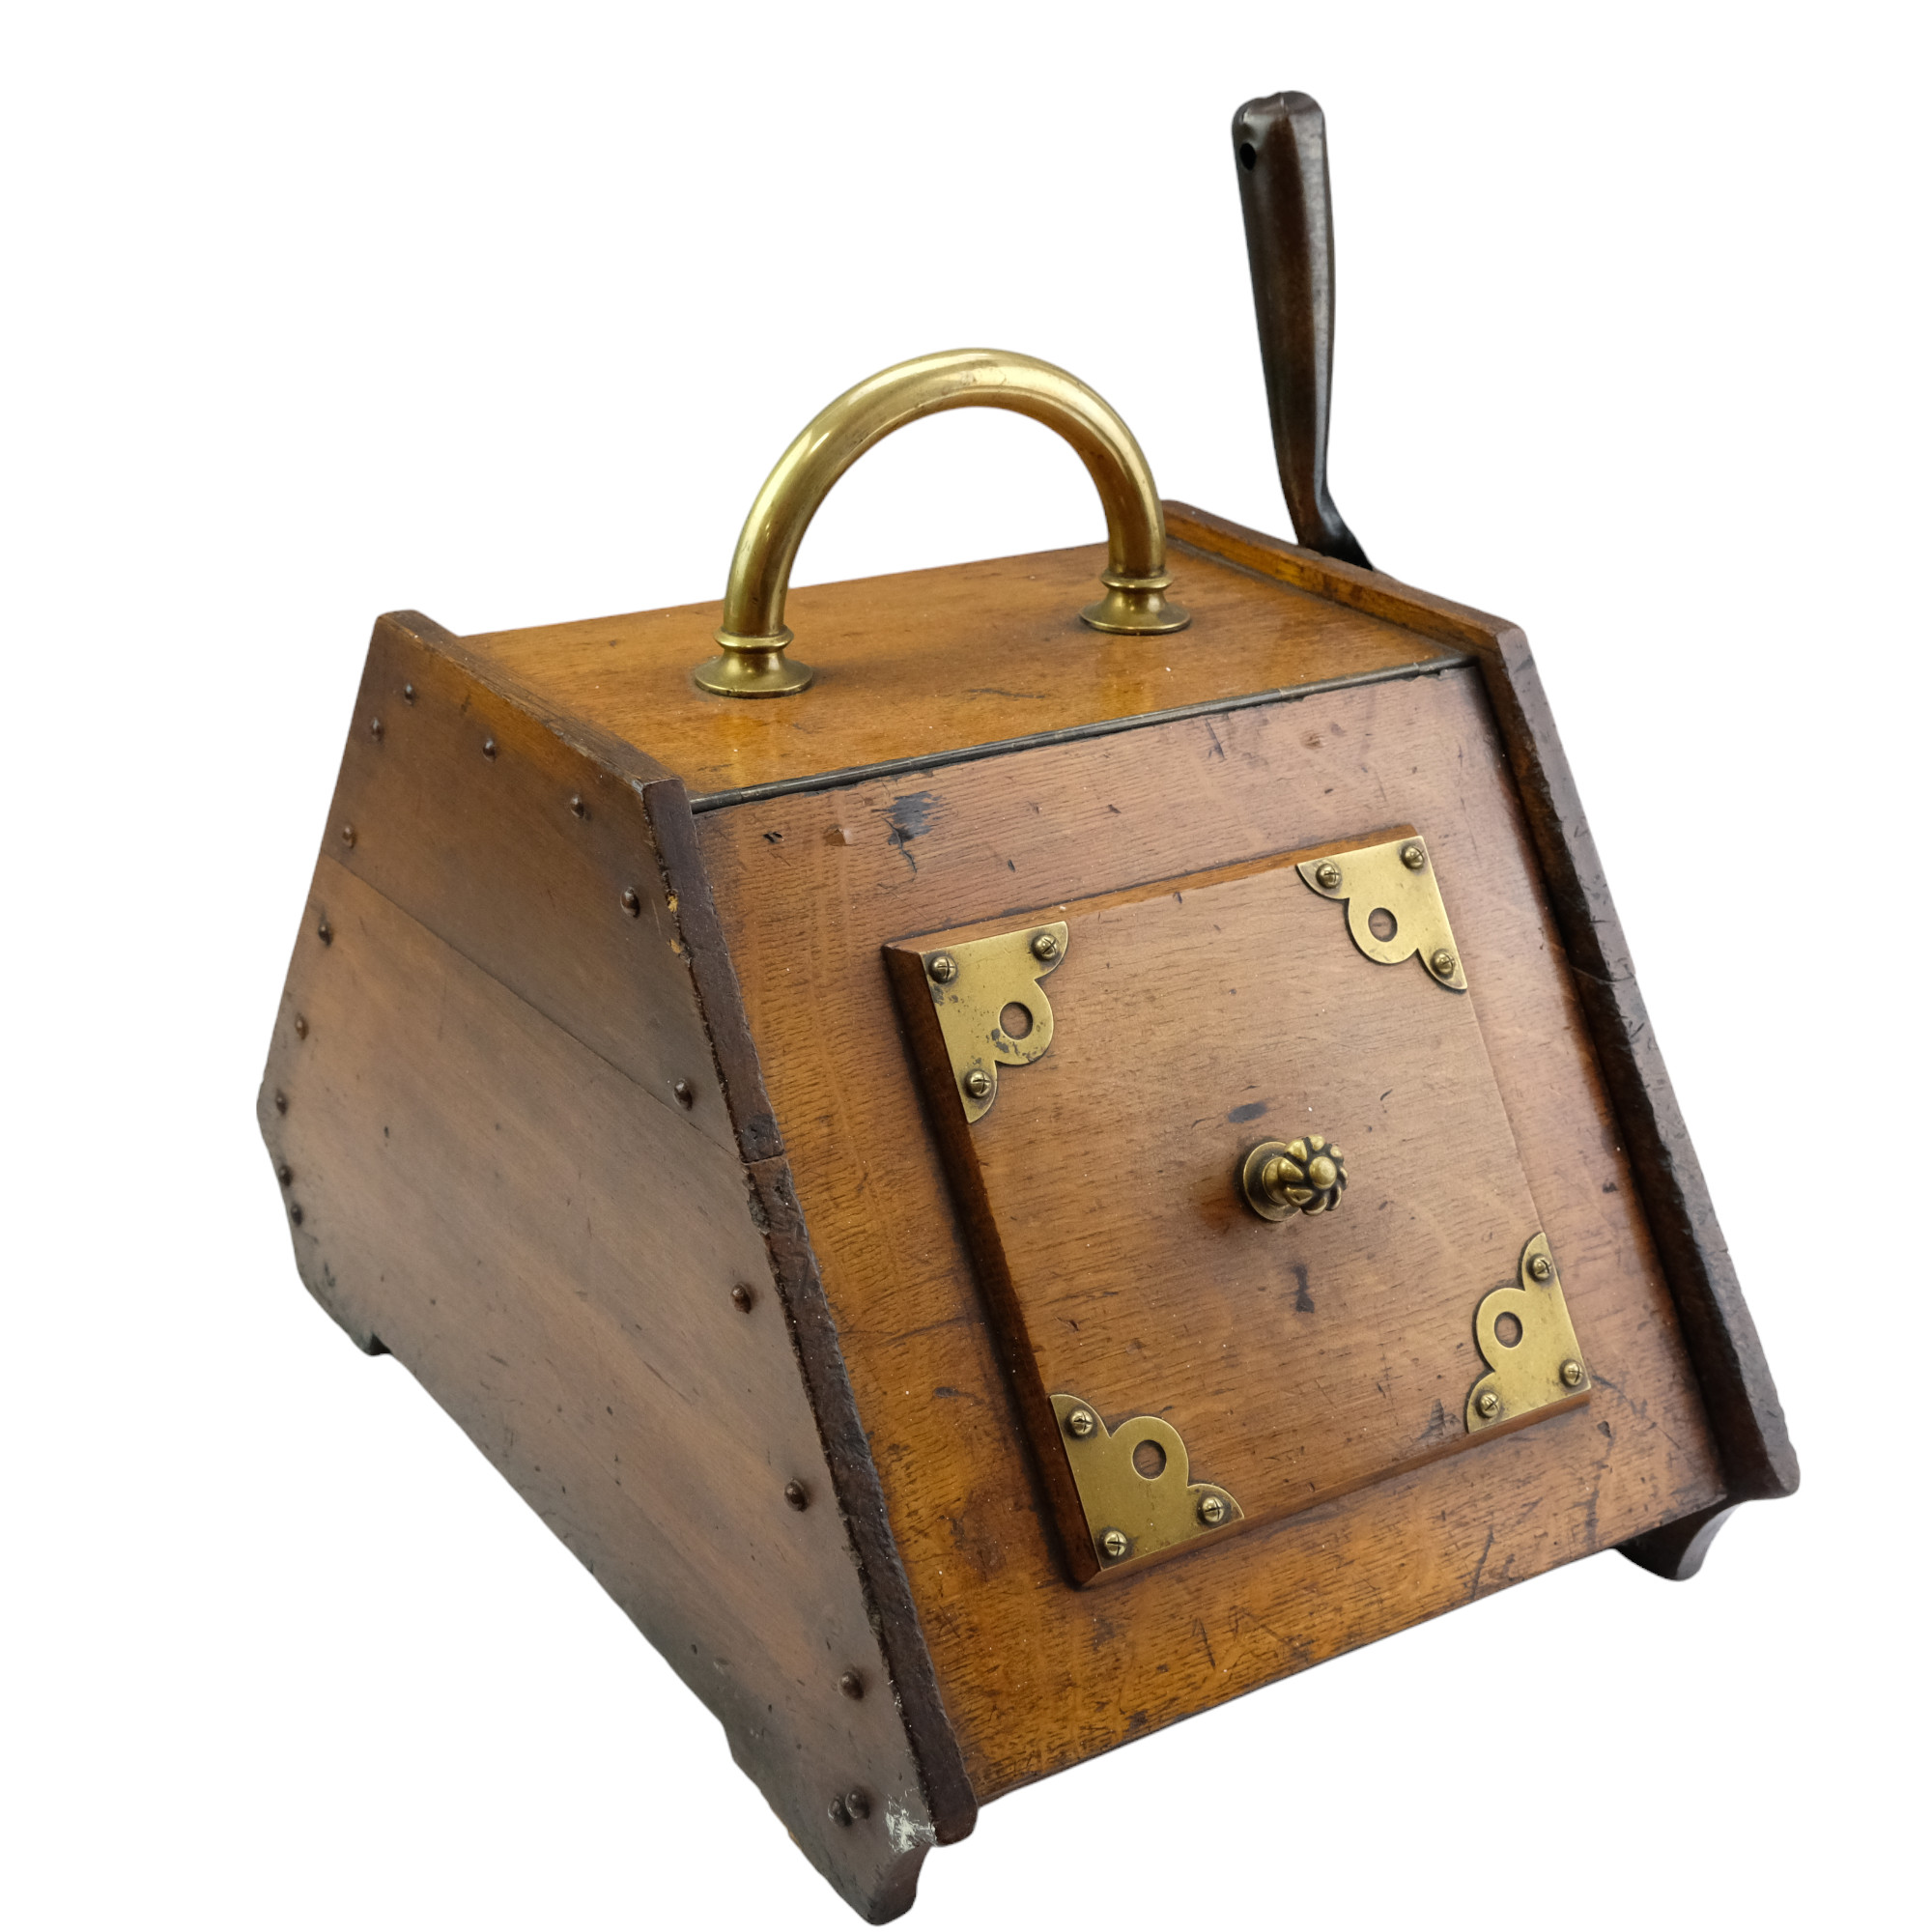 A Victorian brass-mounted oak coal box